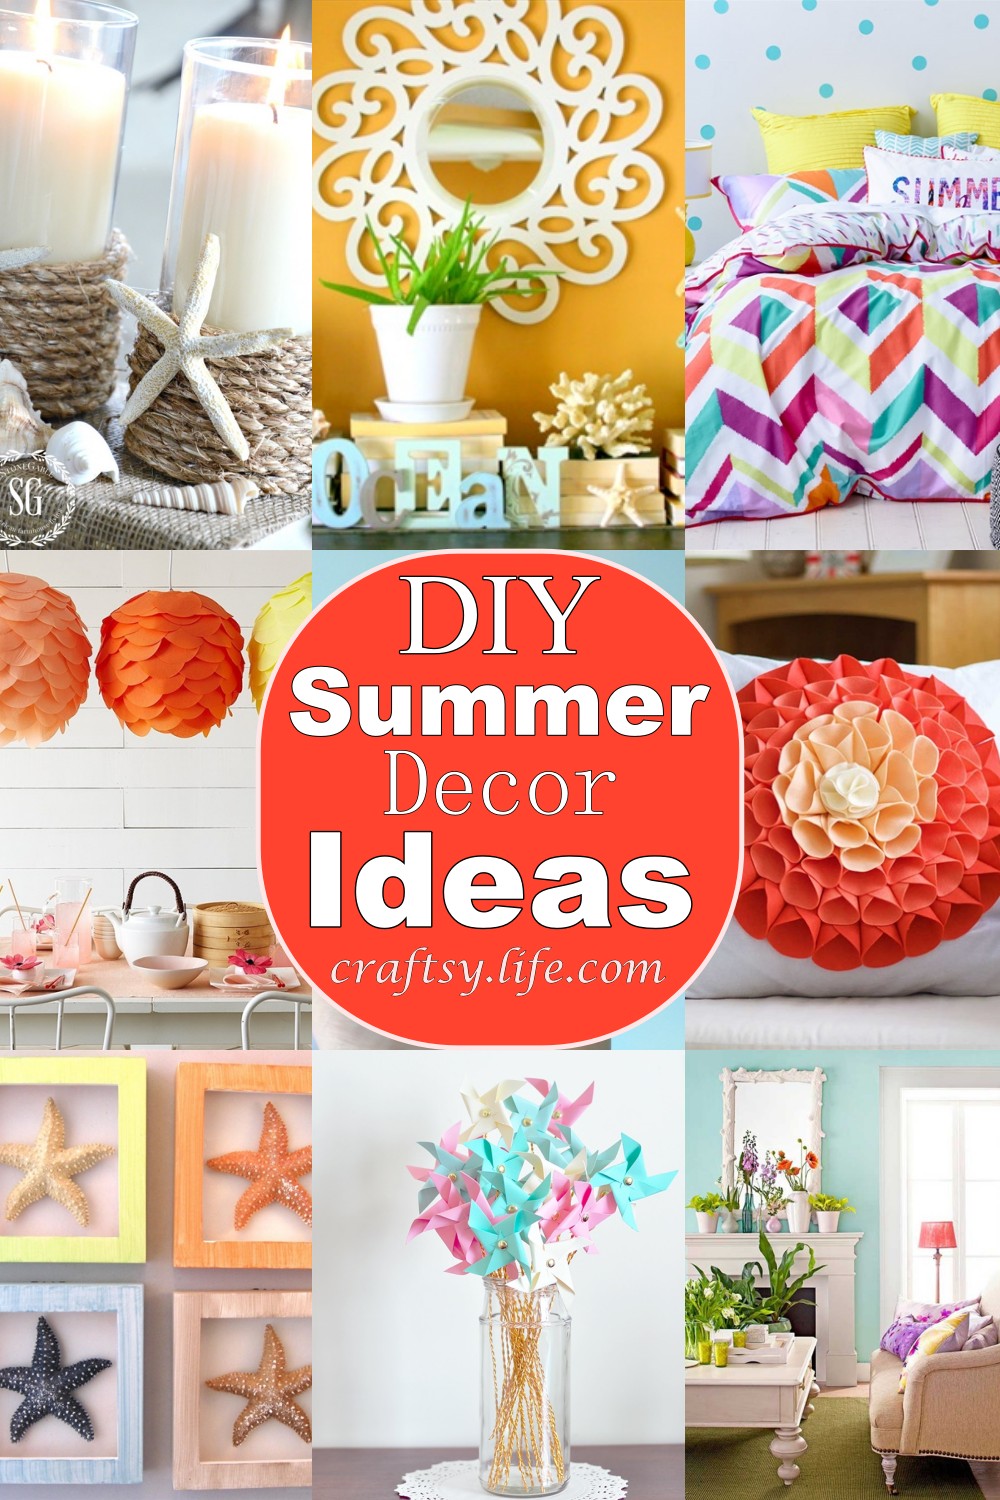 DIY Summer Decor Ideas